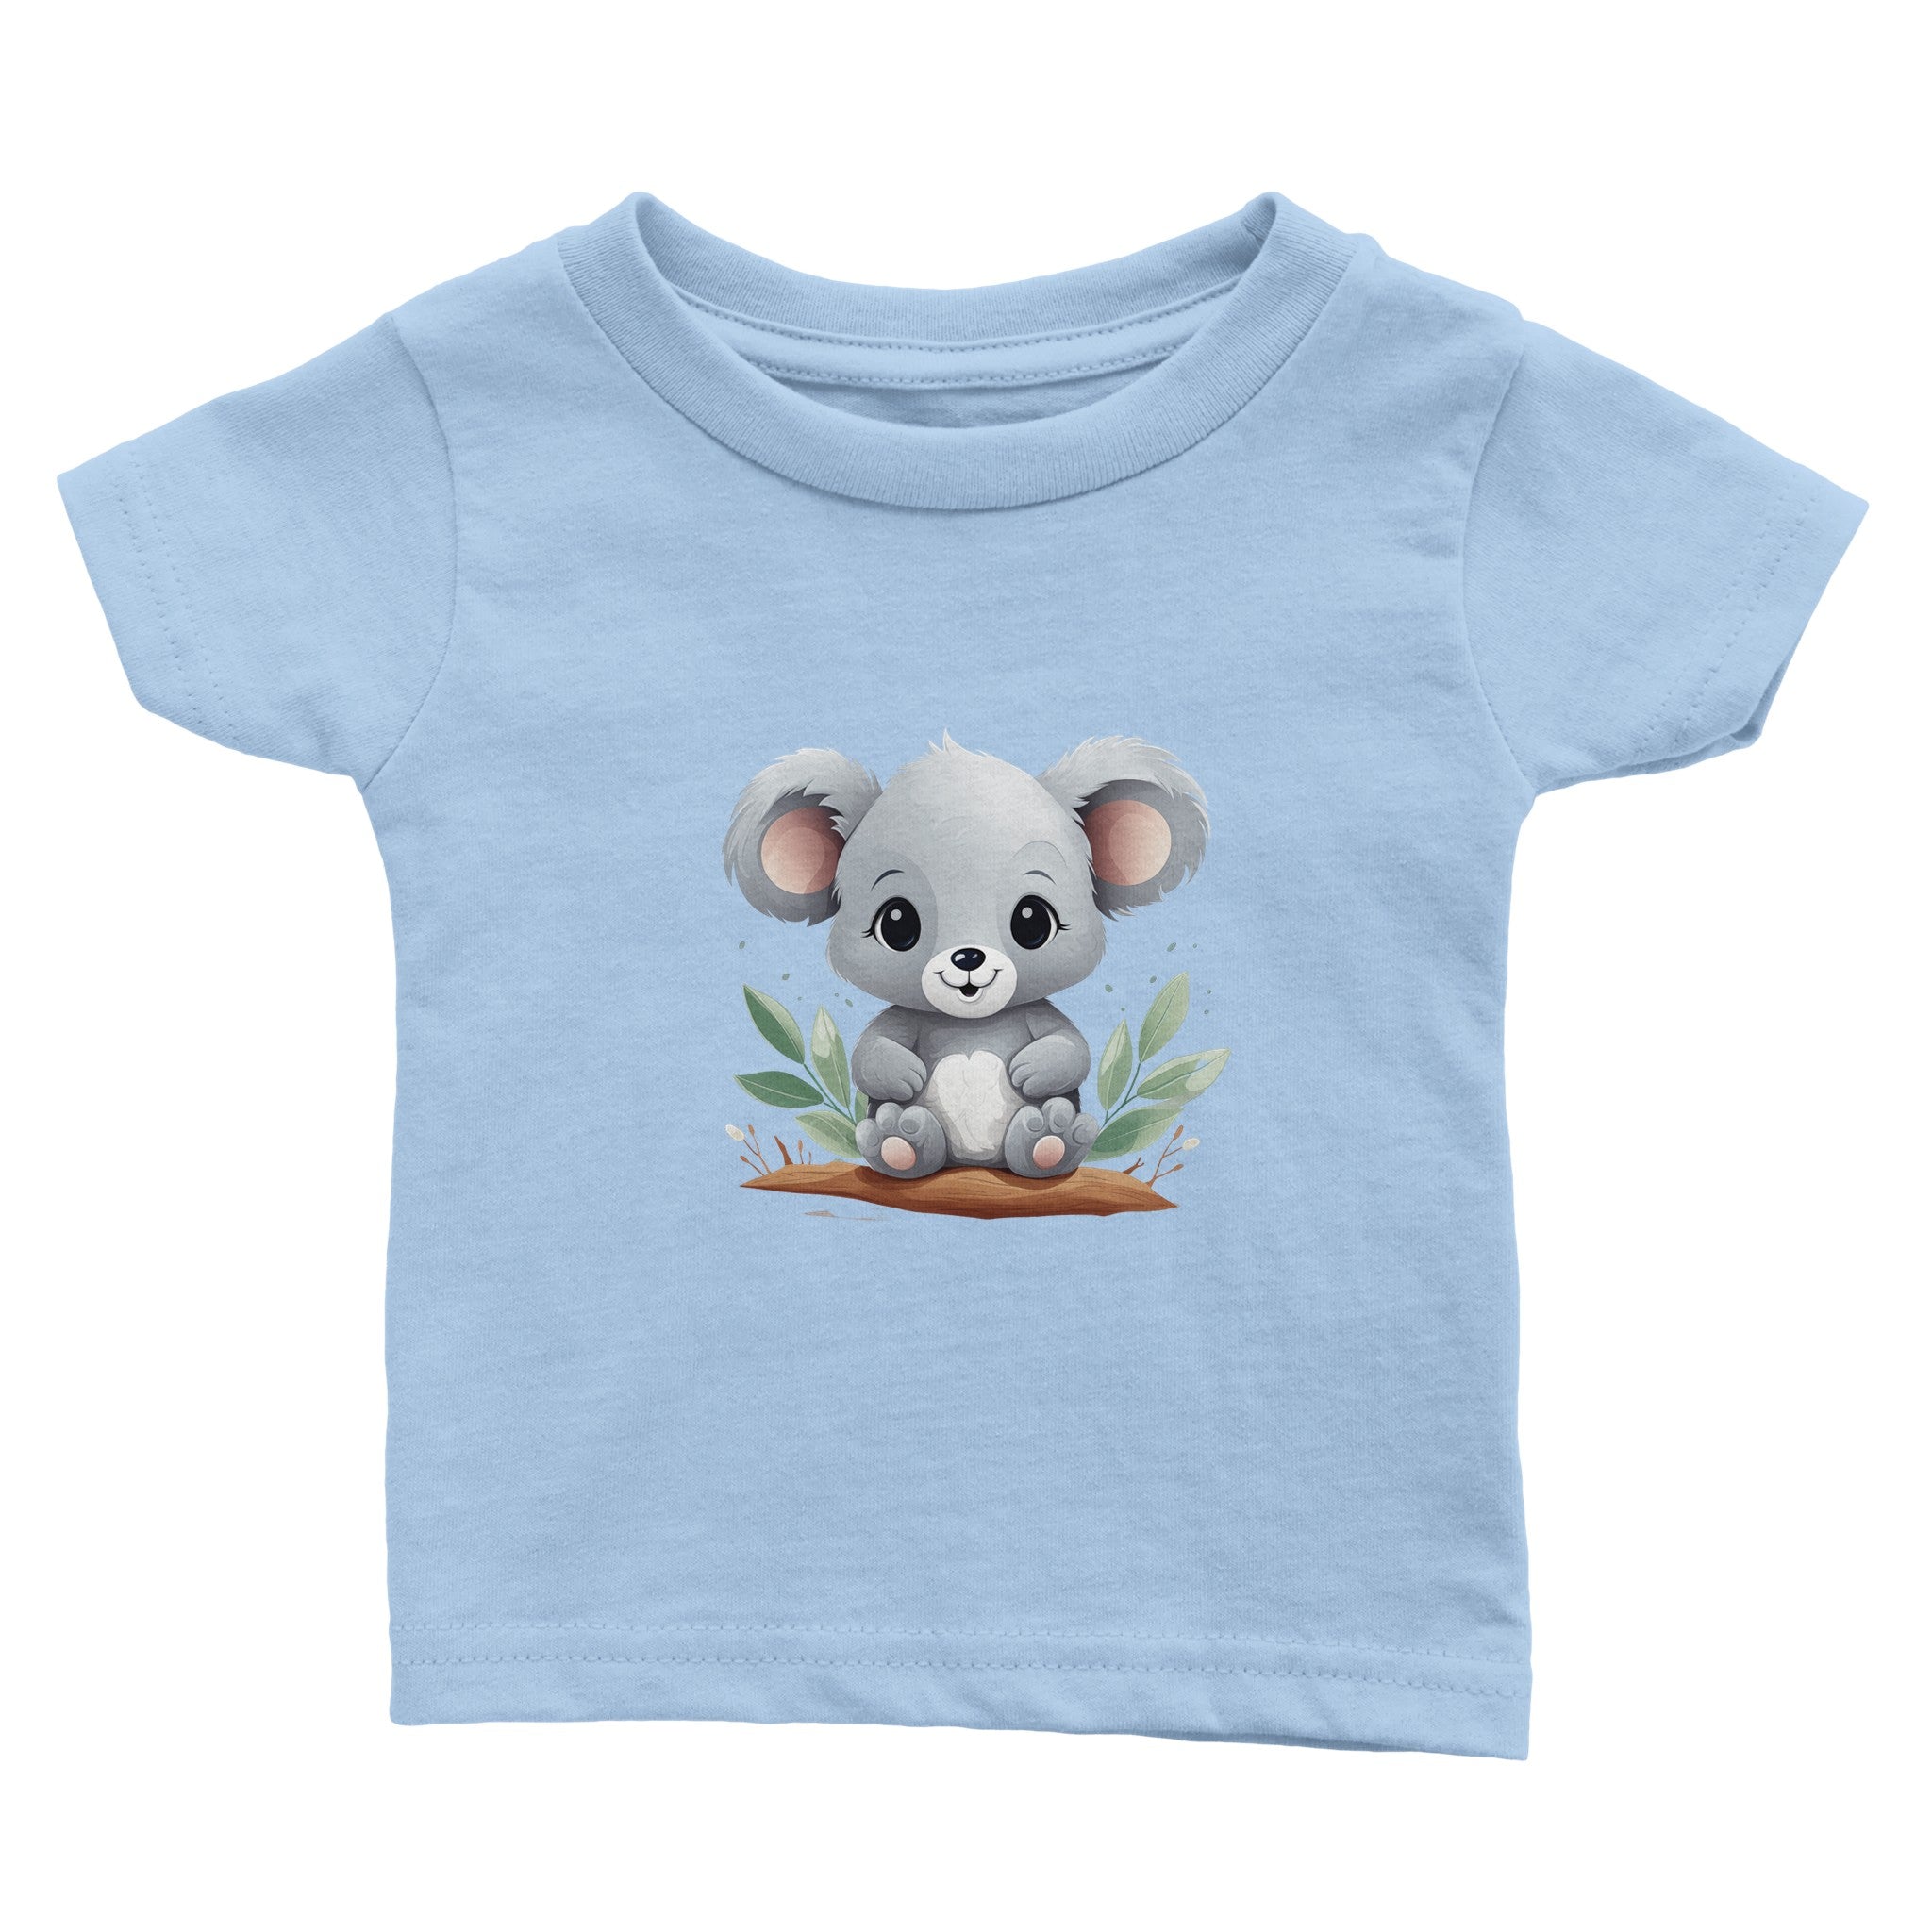 Cuddly Koala Buddy Baby Crewneck T-shirt - Optimalprint